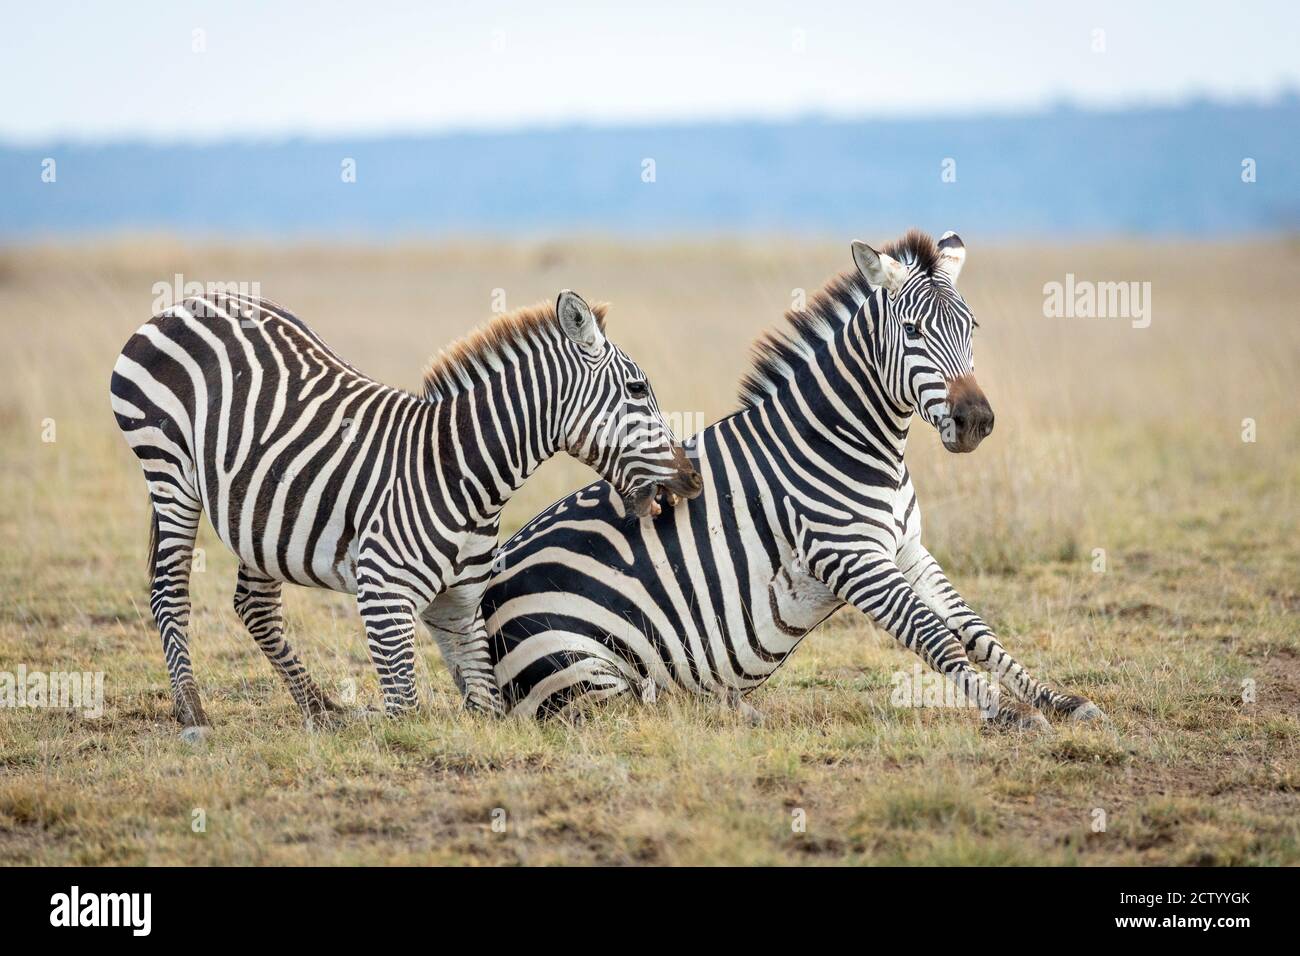 Two zebras play fighting in Amboseli National Park in Kenya Stock Photo